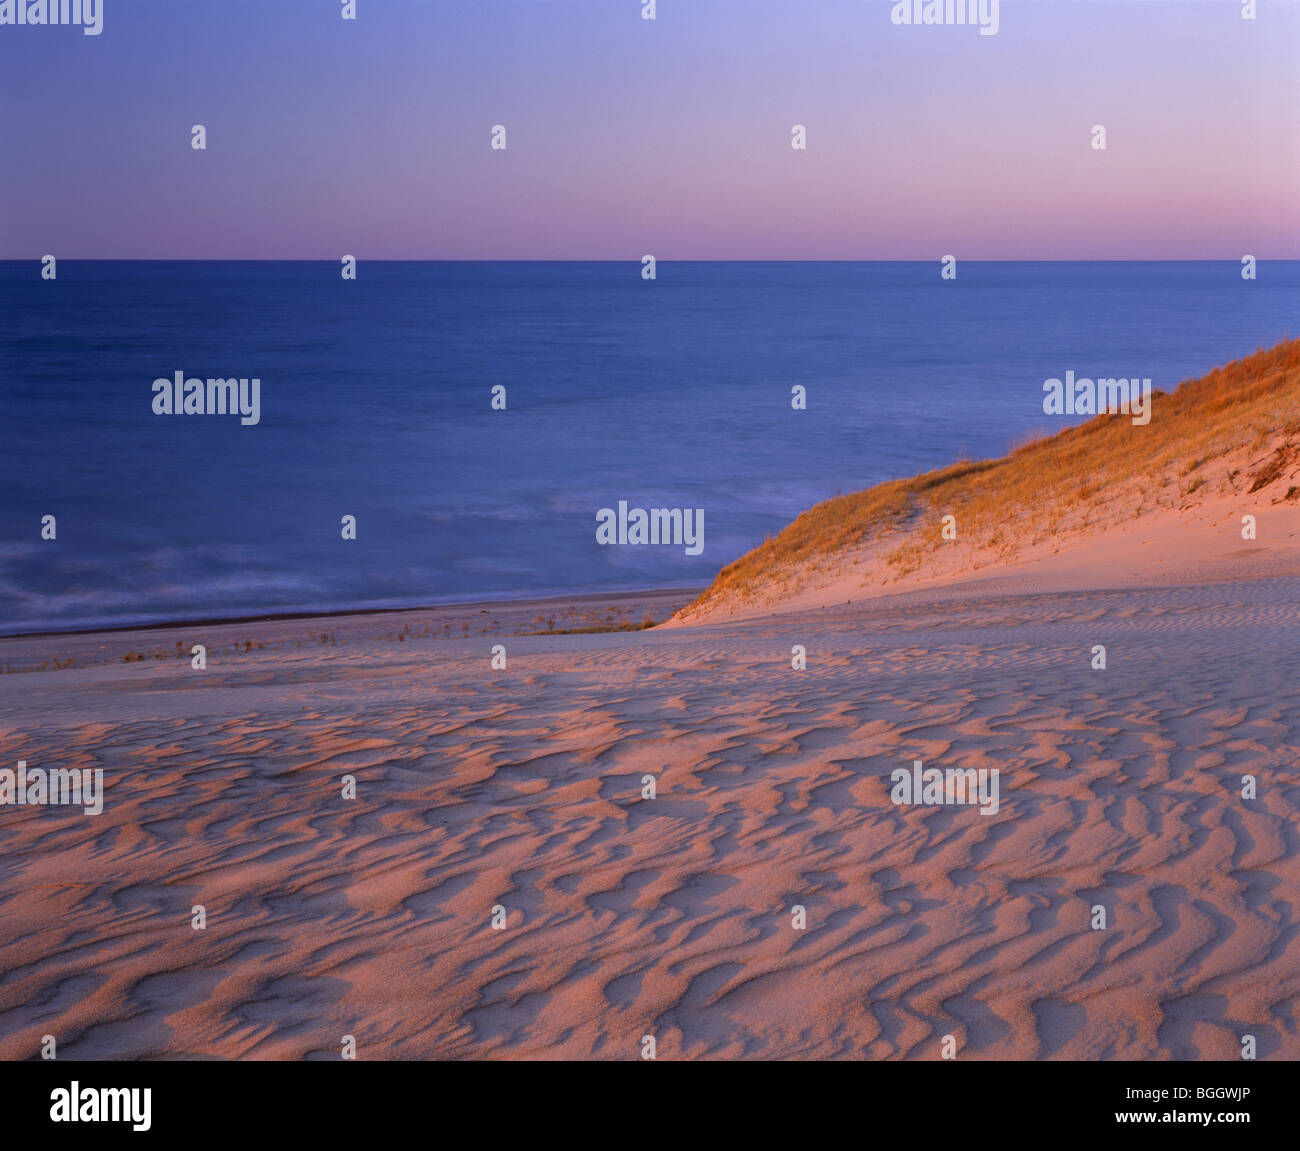 INDIANA - Muster in den Sand auf Mount Baldy einer Sanddüne am Ufer des Lake Michigan in Indiana Dunes National Lakeshore. Stockfoto